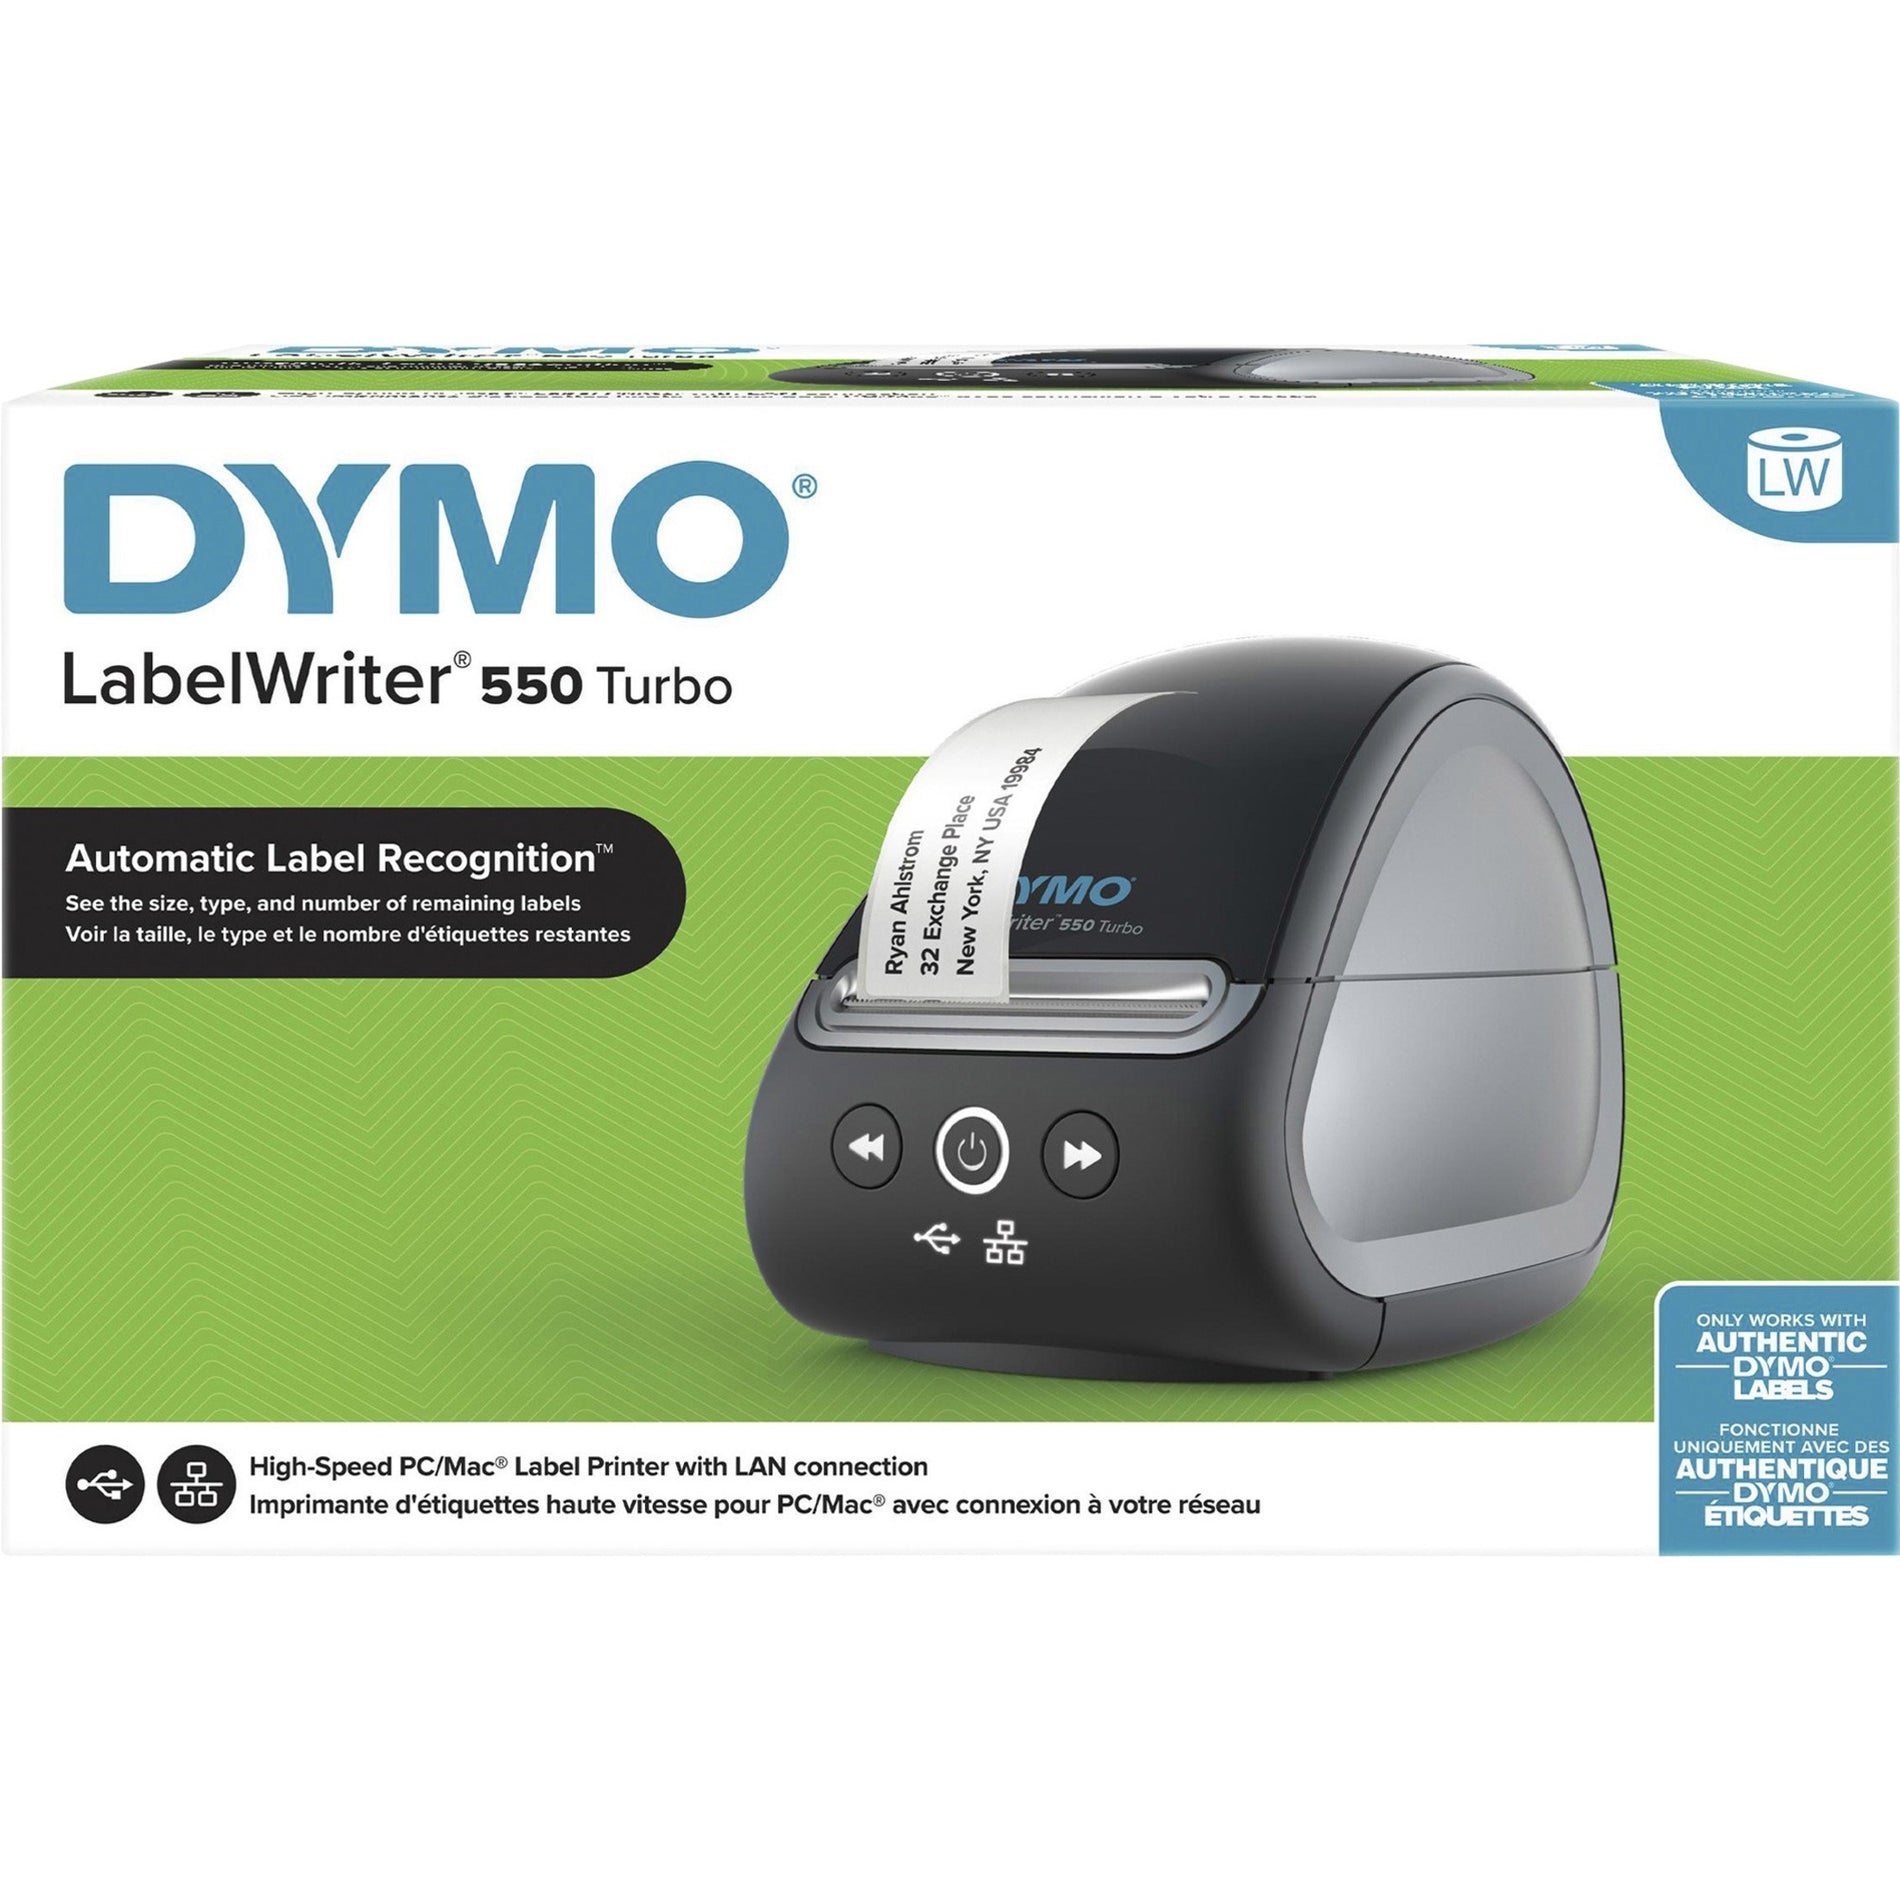 Dymo 2112553 LabelWriter 550 Turbo Label Printer, Direct Thermal Printer, 2 Year Warranty, Mac/PC Compatible